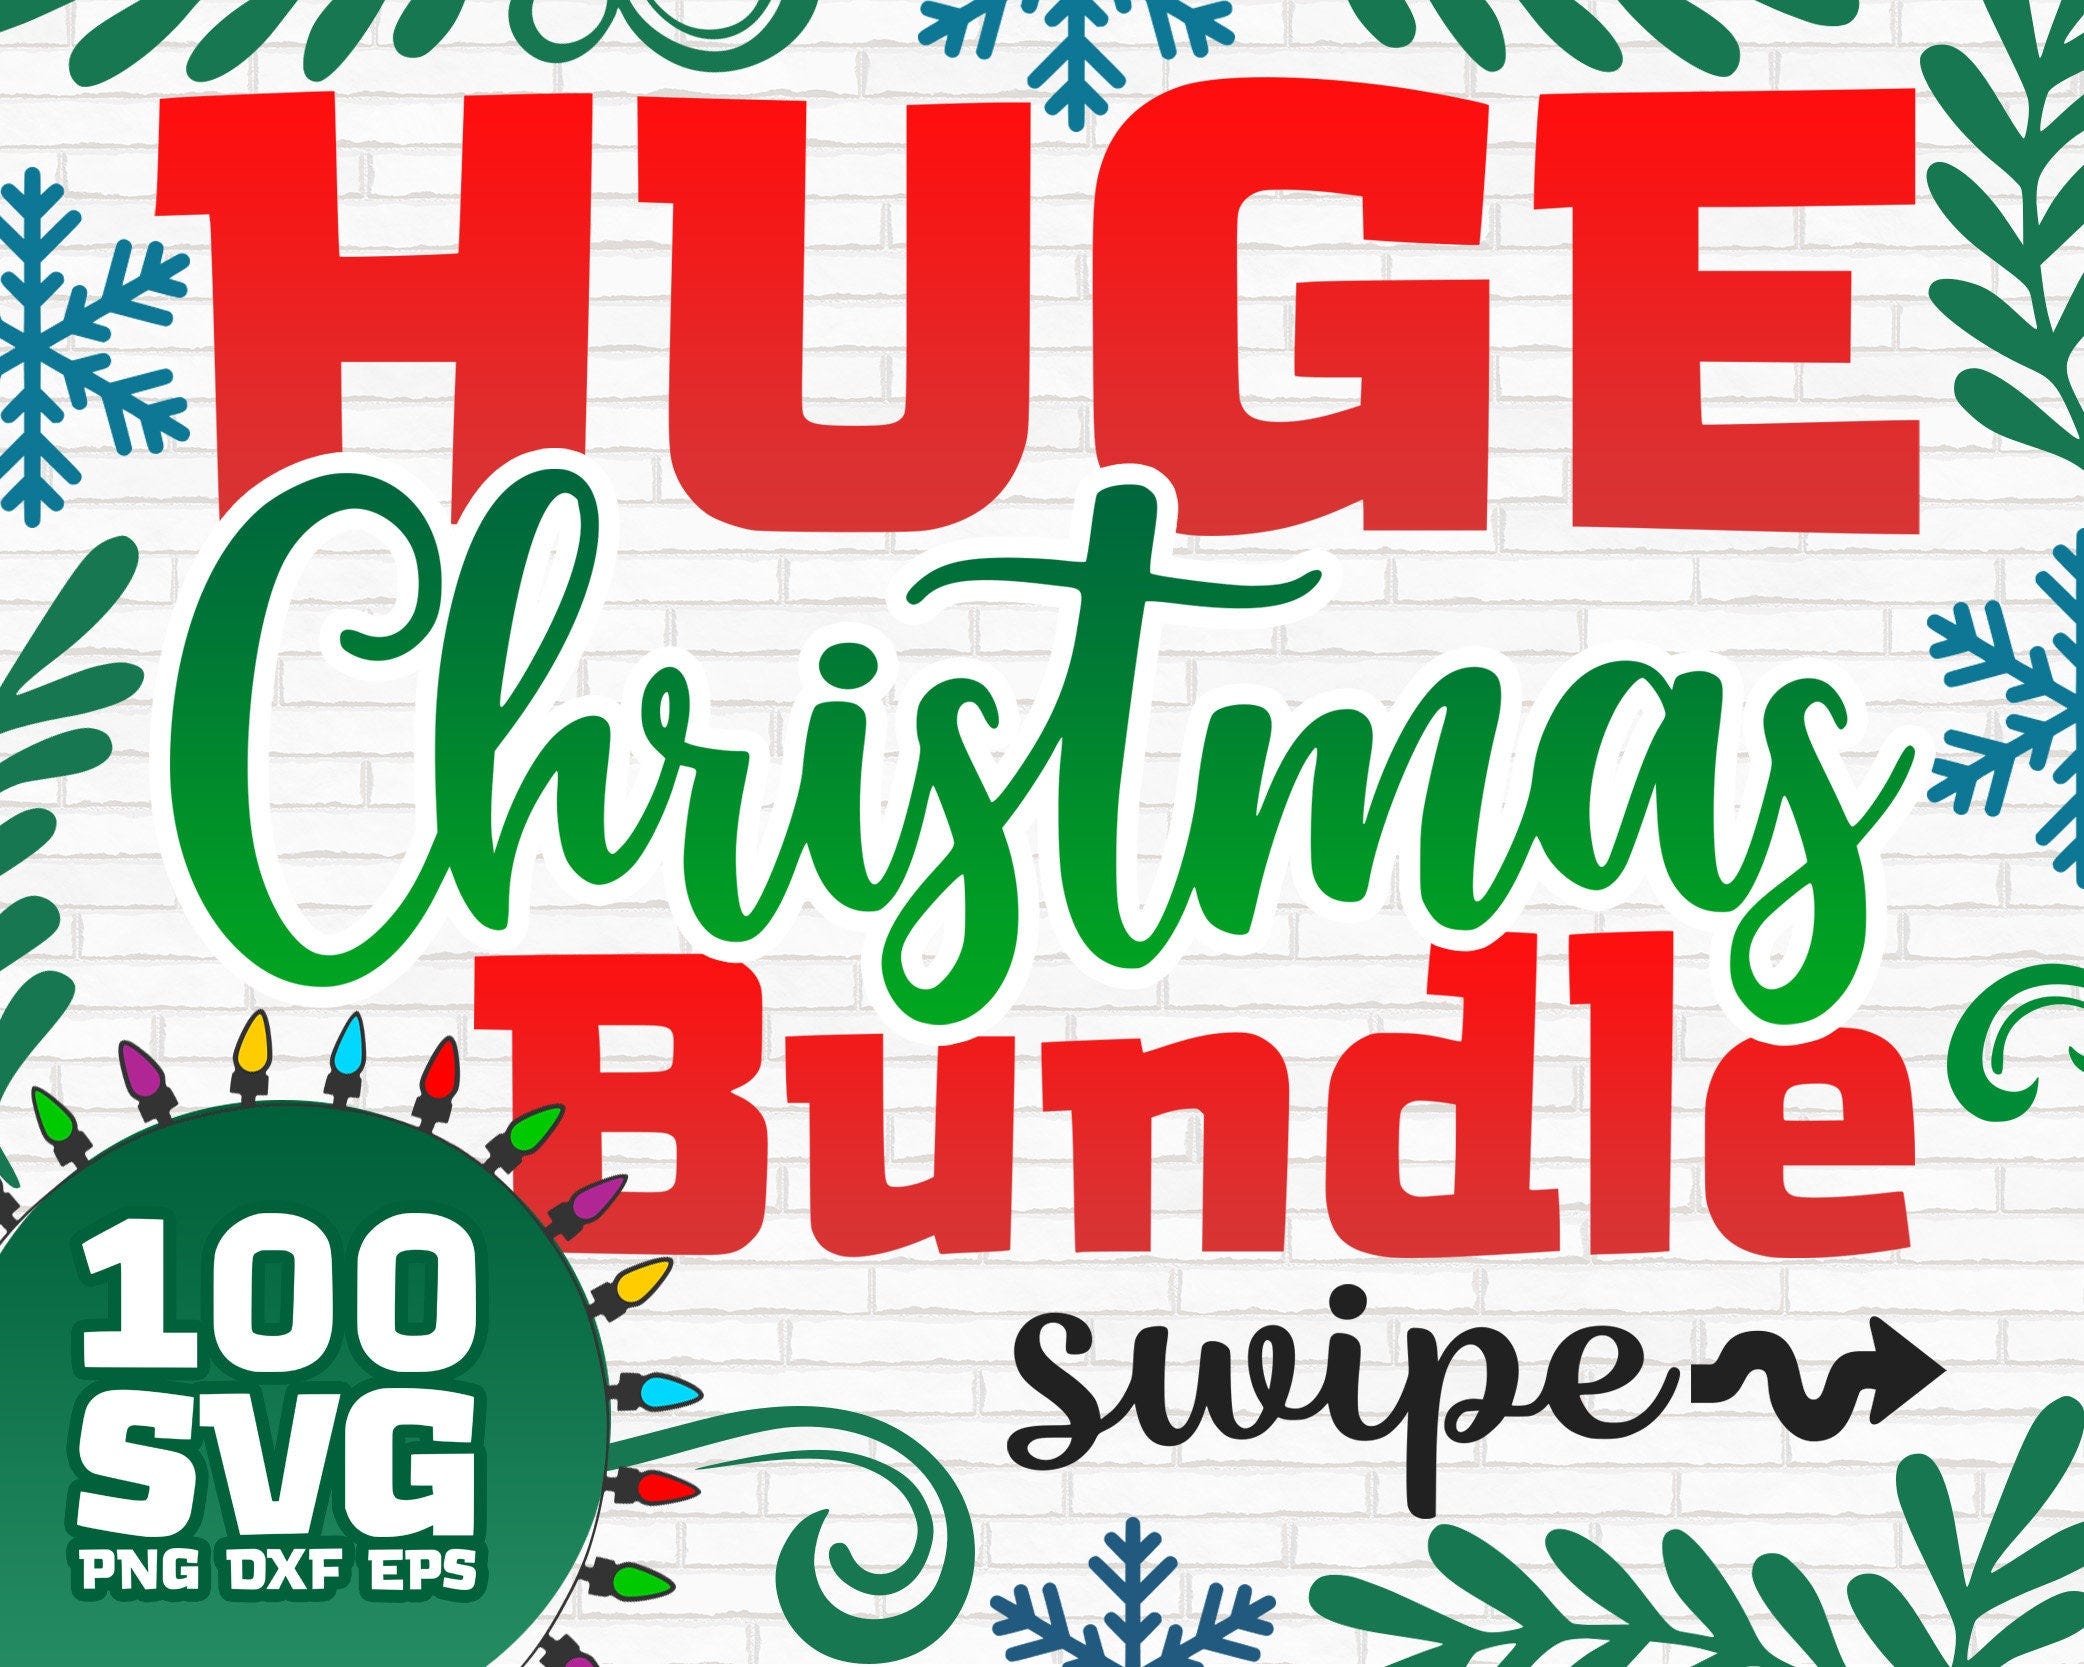 HUGE Christmas SVG Bundle, Christmas Svg, Winter Svg, Holiday Svg, Christmas for Shirts, Christmas Cut Files, Cricut, Silhouette, Svg, Png